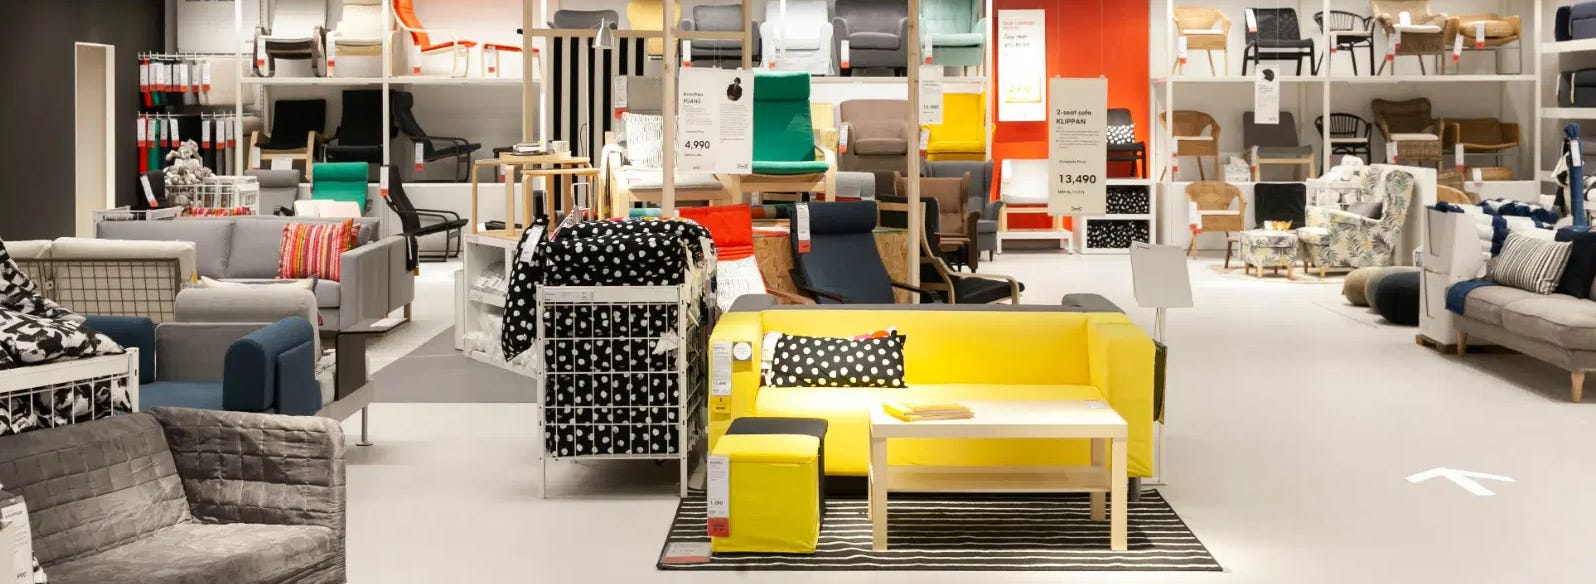 Business Case Study: IKEA's Billion $ Pricing Strategy